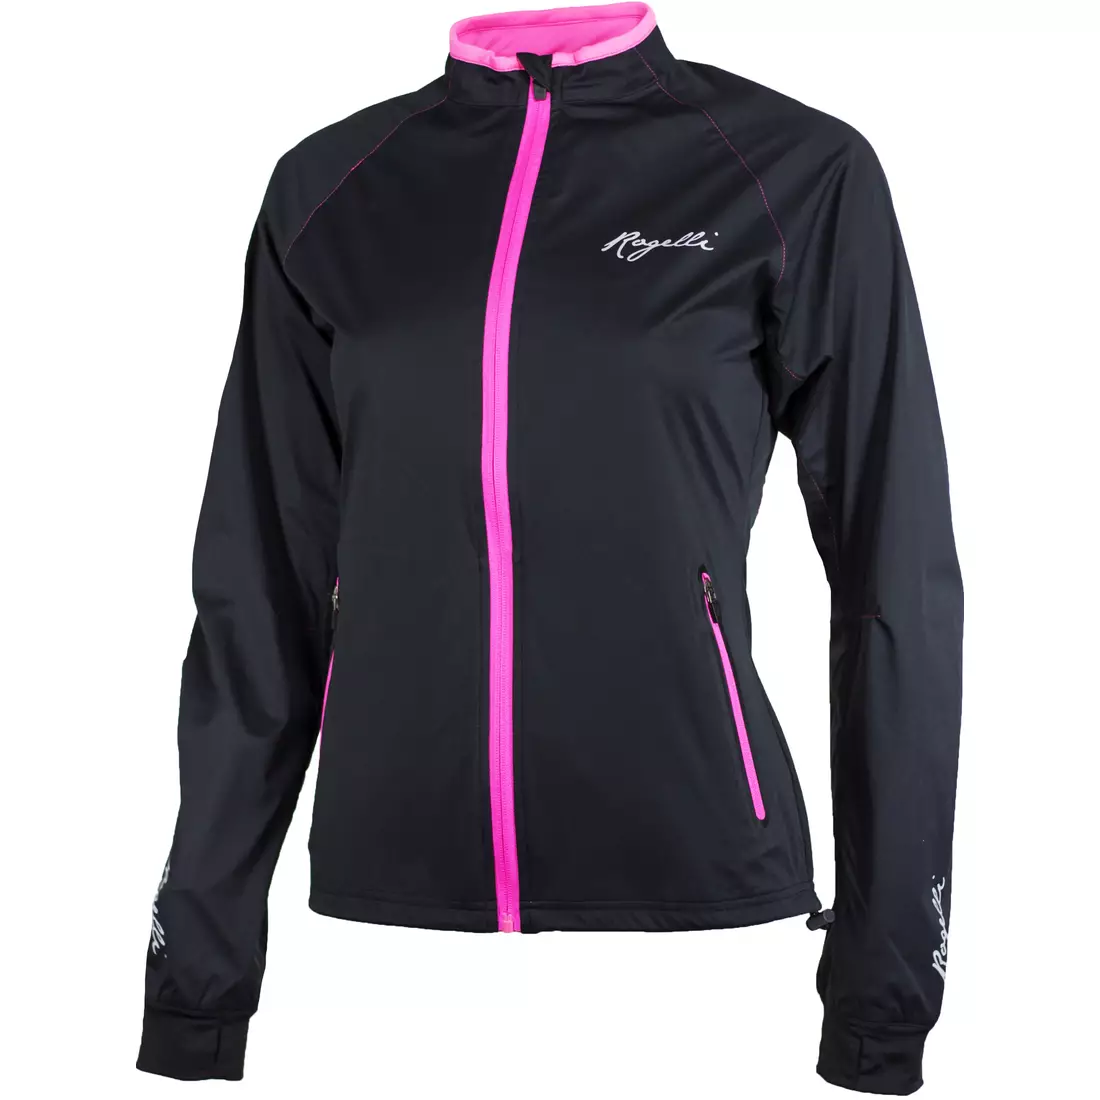 ROGELLI RUN STELLE 801.800 - dámská nepromokavá běžecká bunda, černá a růžová